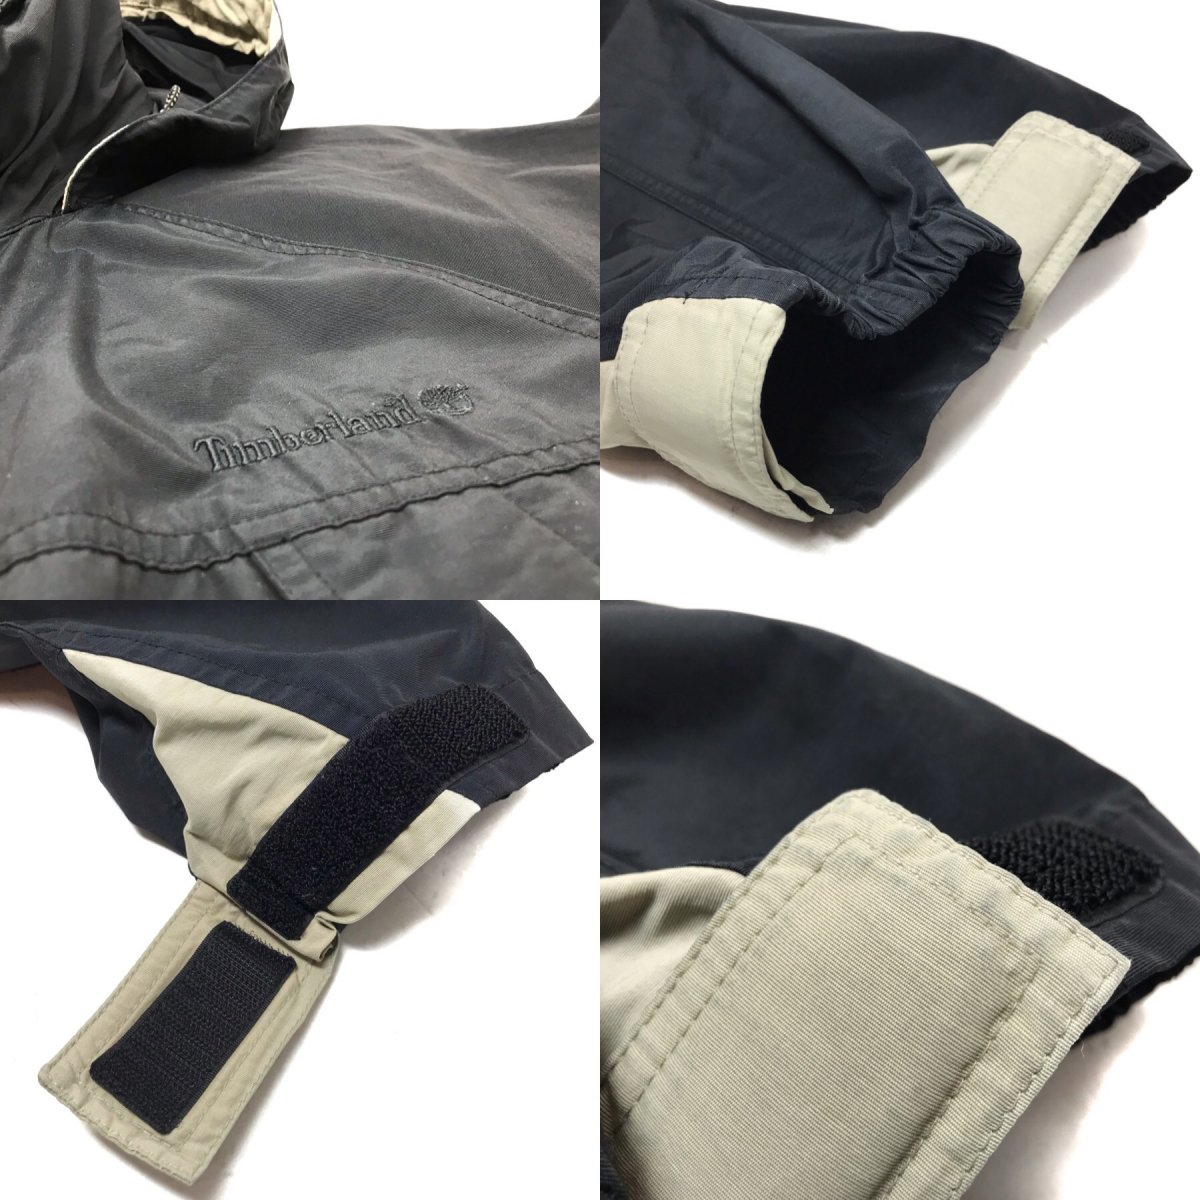 s Timberland WEATHERGEAR Cotton Nylon Field Jacket 黒 L 年製